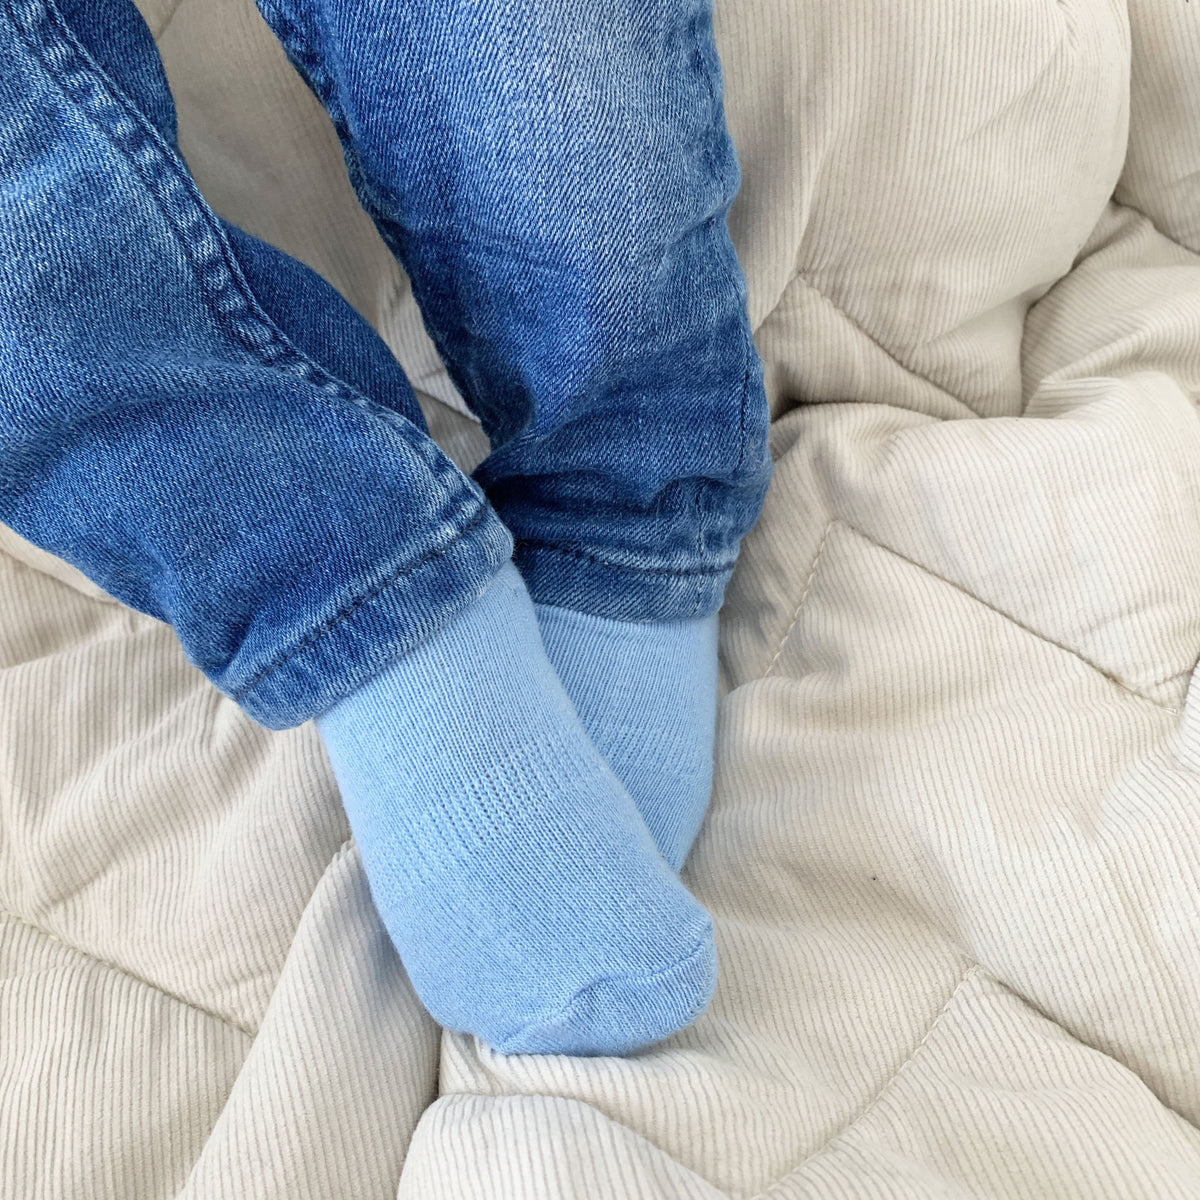 Non-Slip Stay On Baby and Toddler Socks - 3 Pack in Ocean Blue & Grey Sky